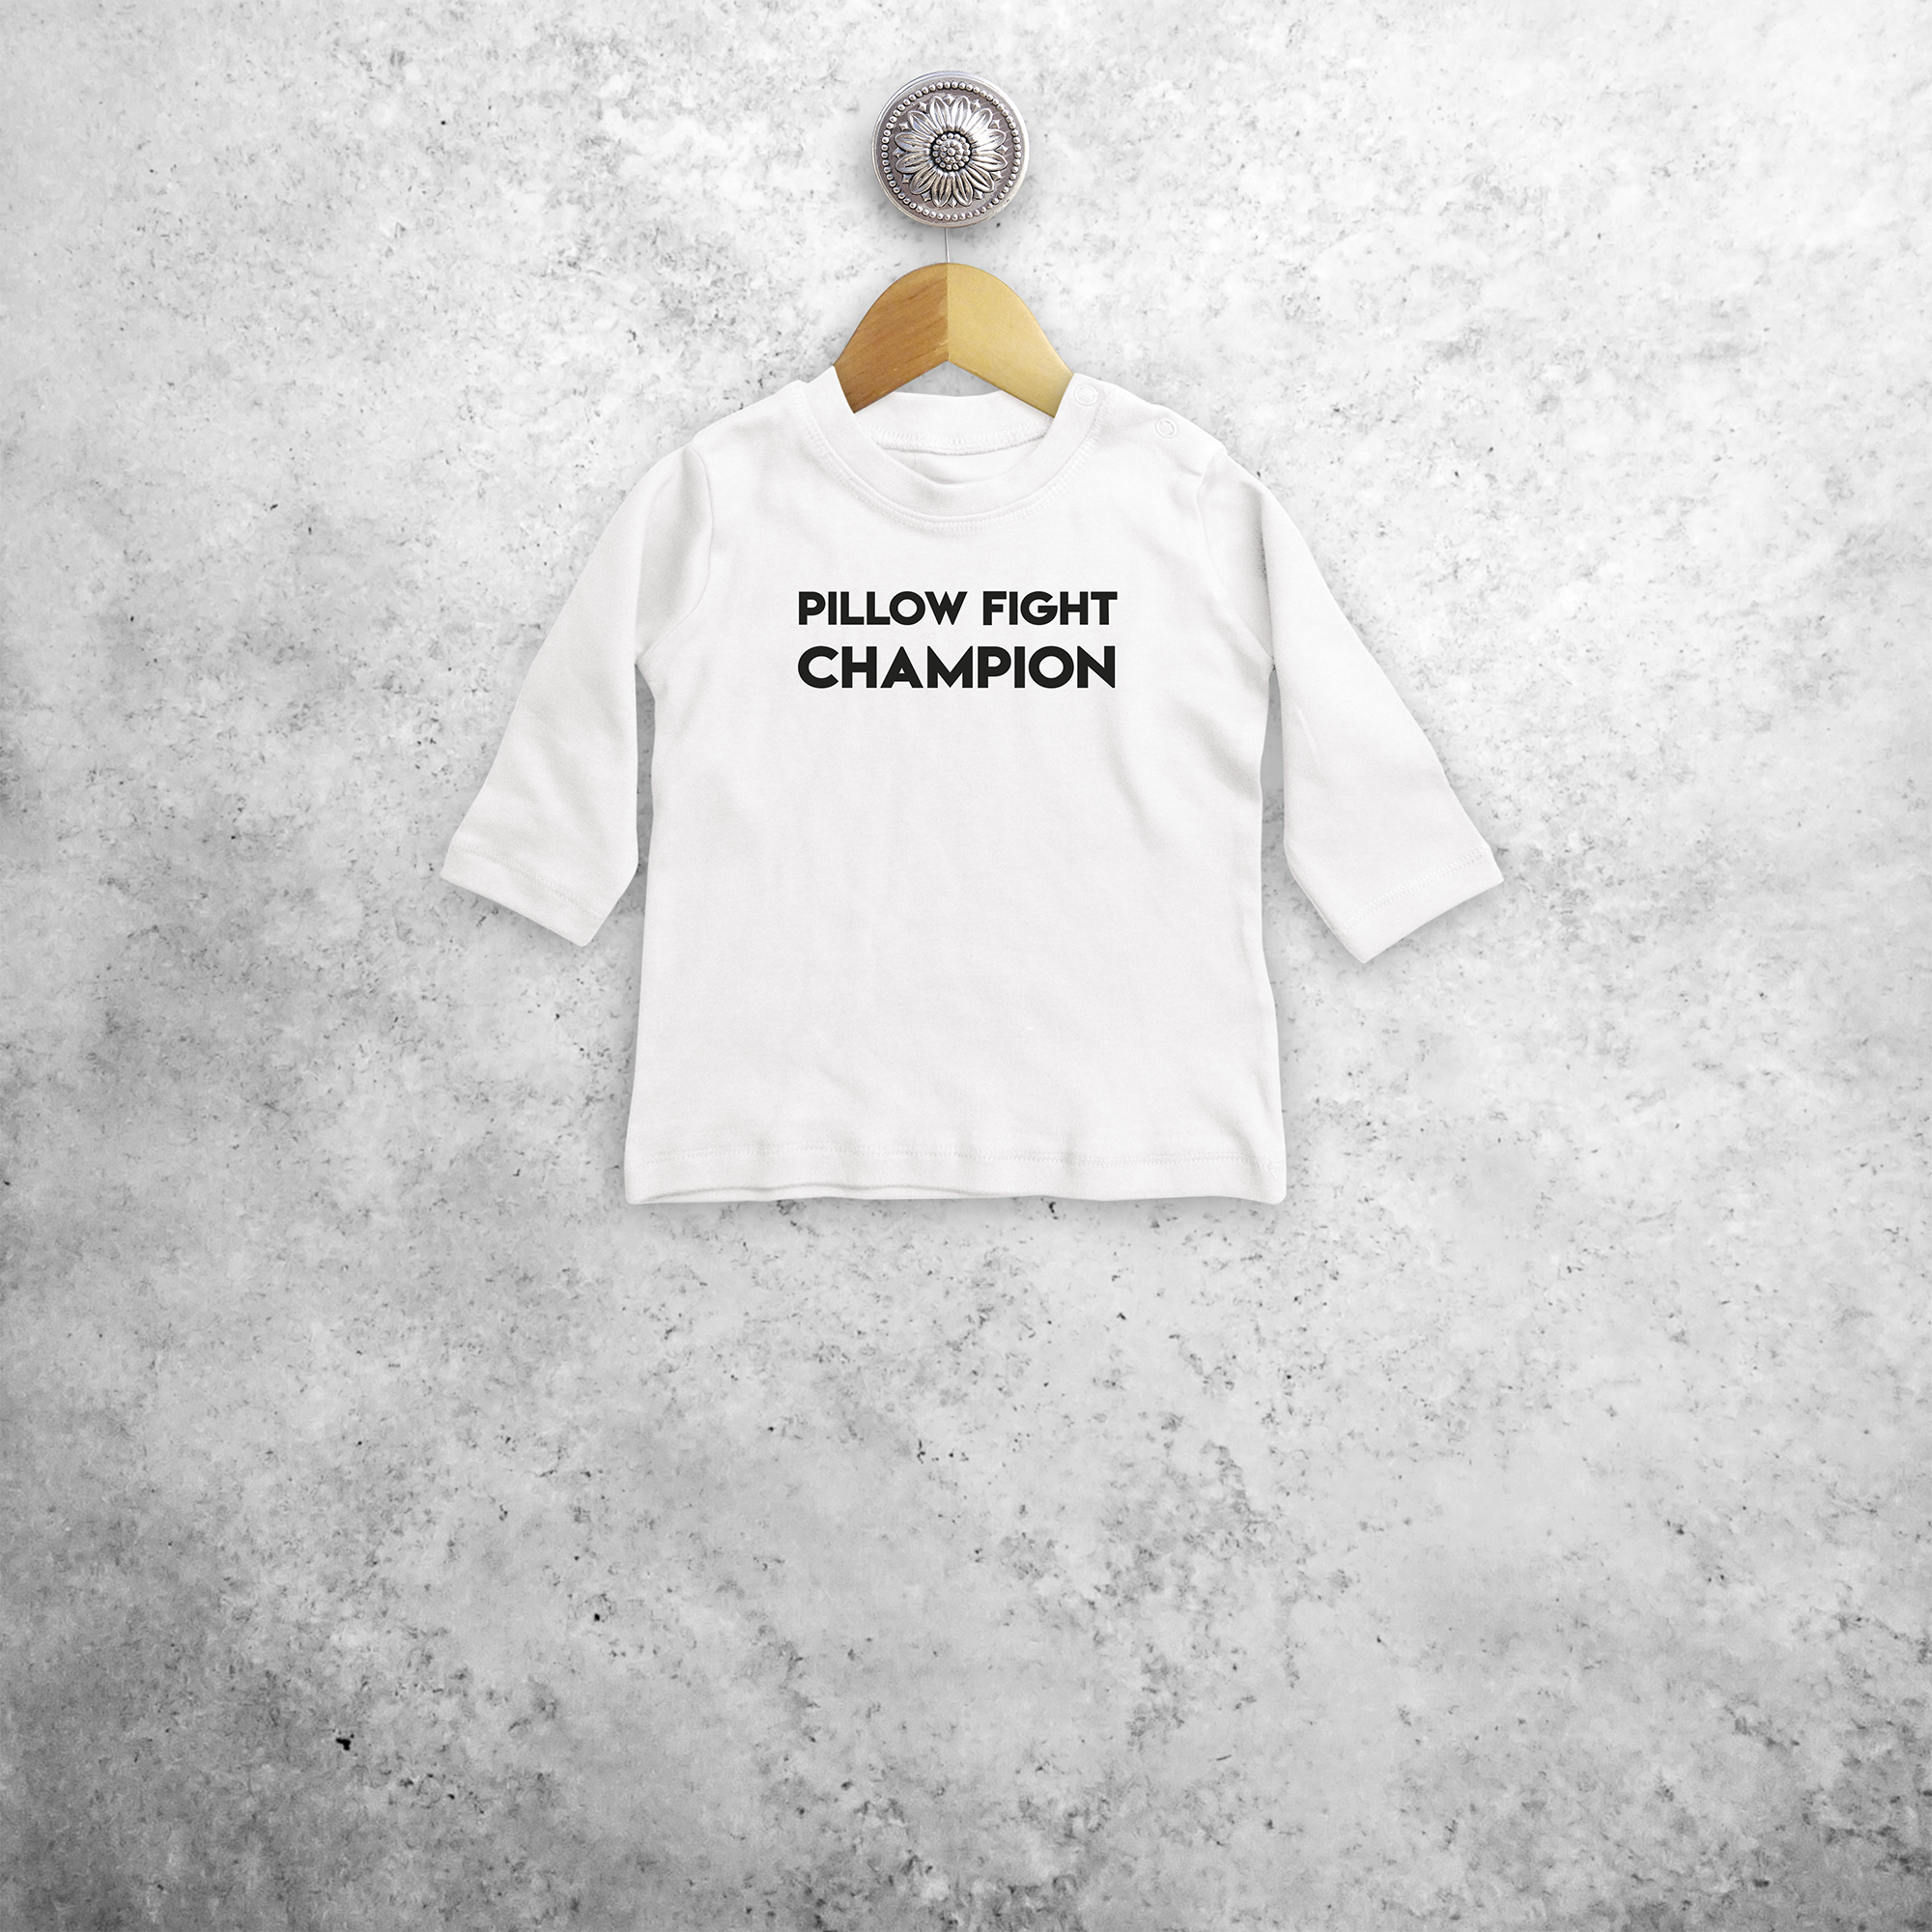 'Pillow fight champion' baby longsleeve shirt